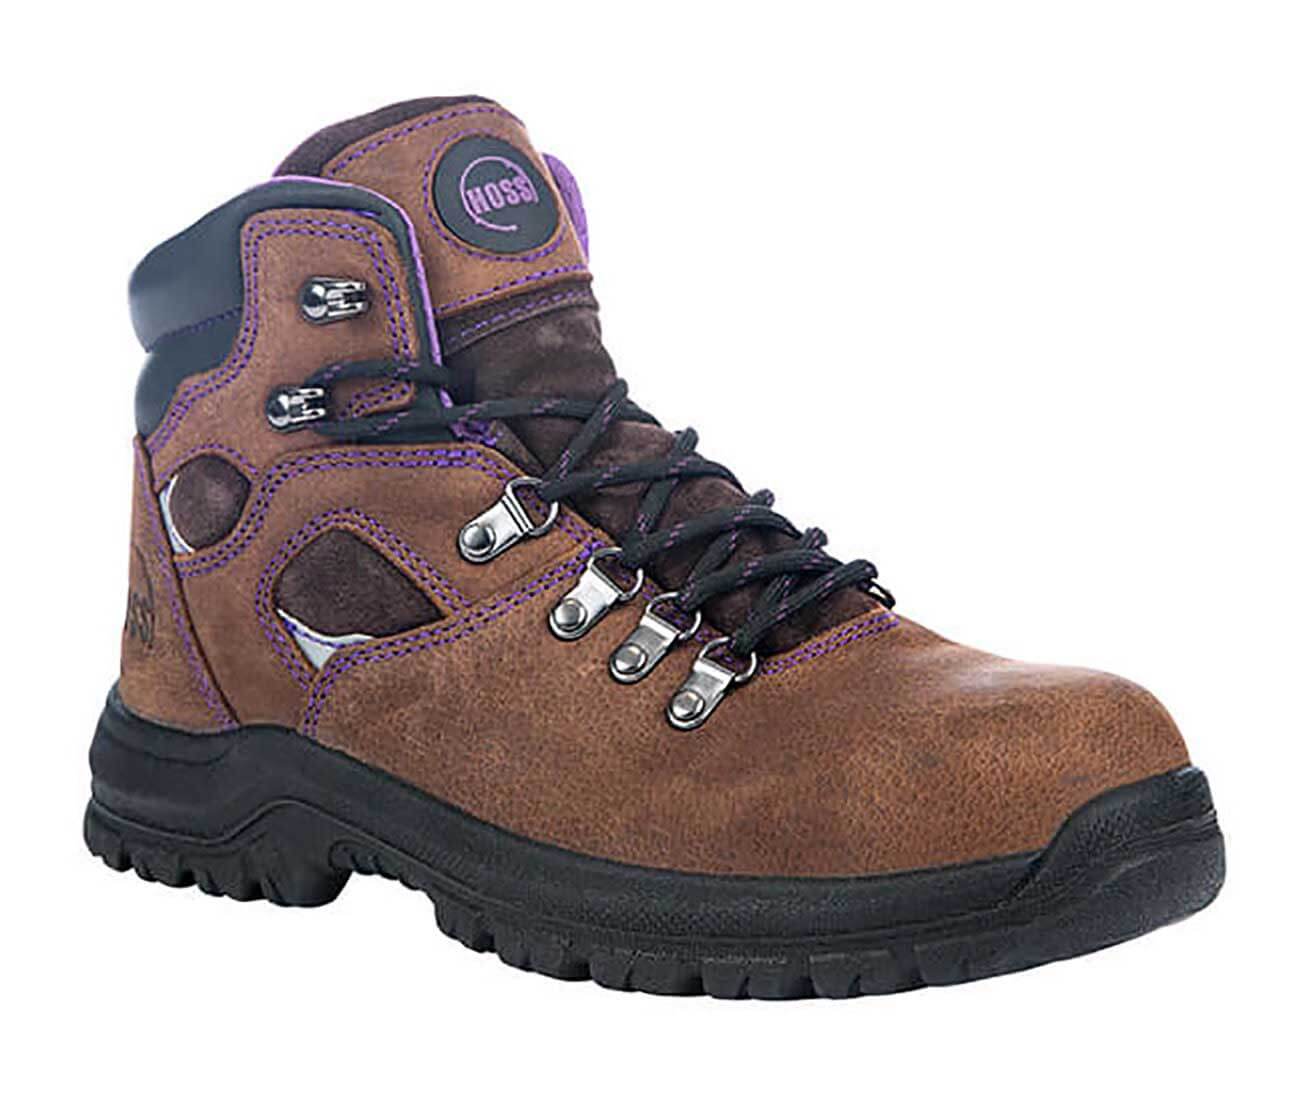 Hoss Boots Lily Brown - 70423 - Women's 6 Steel Toe Work Boot